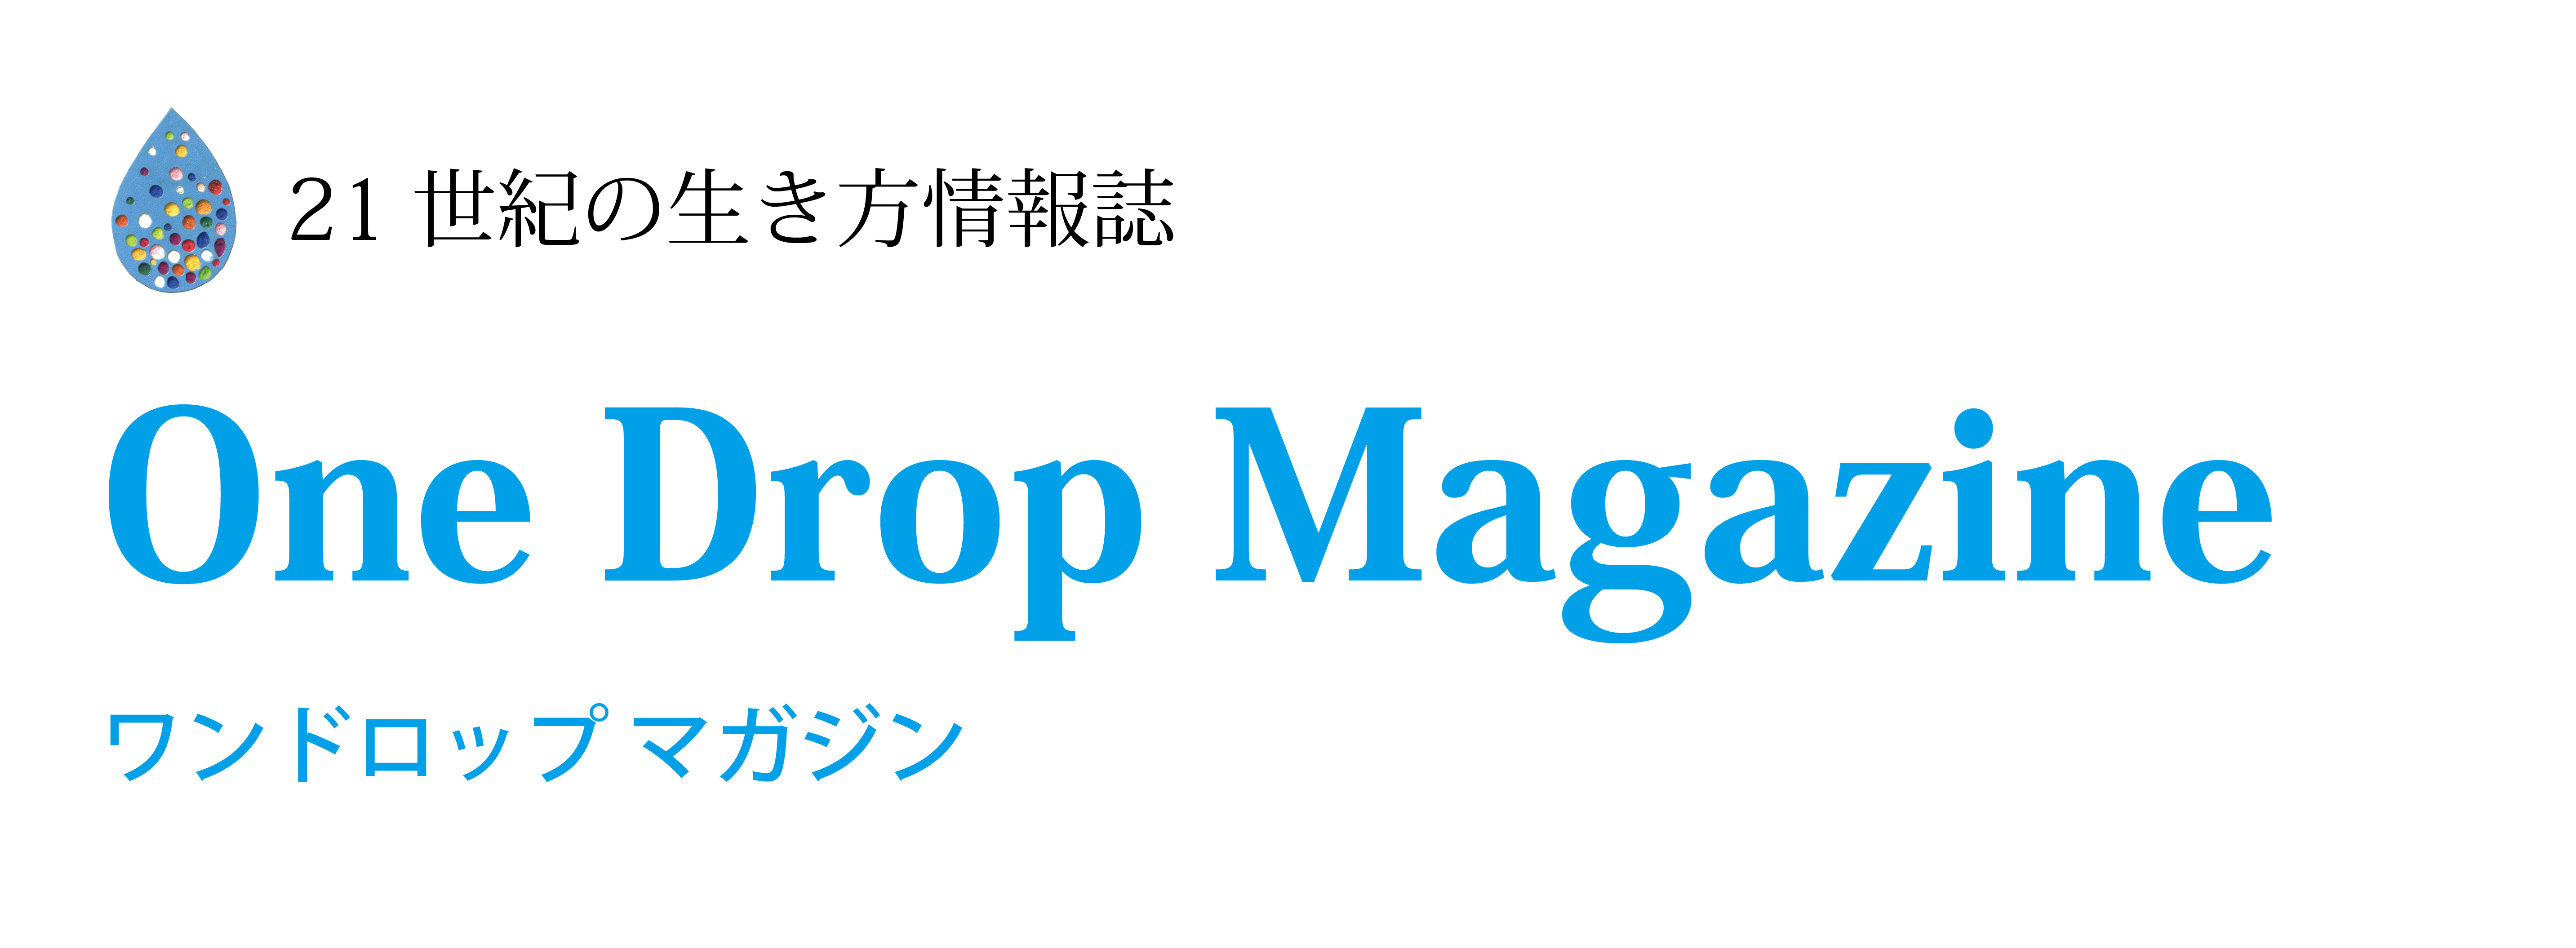 One Drop Magazine Title